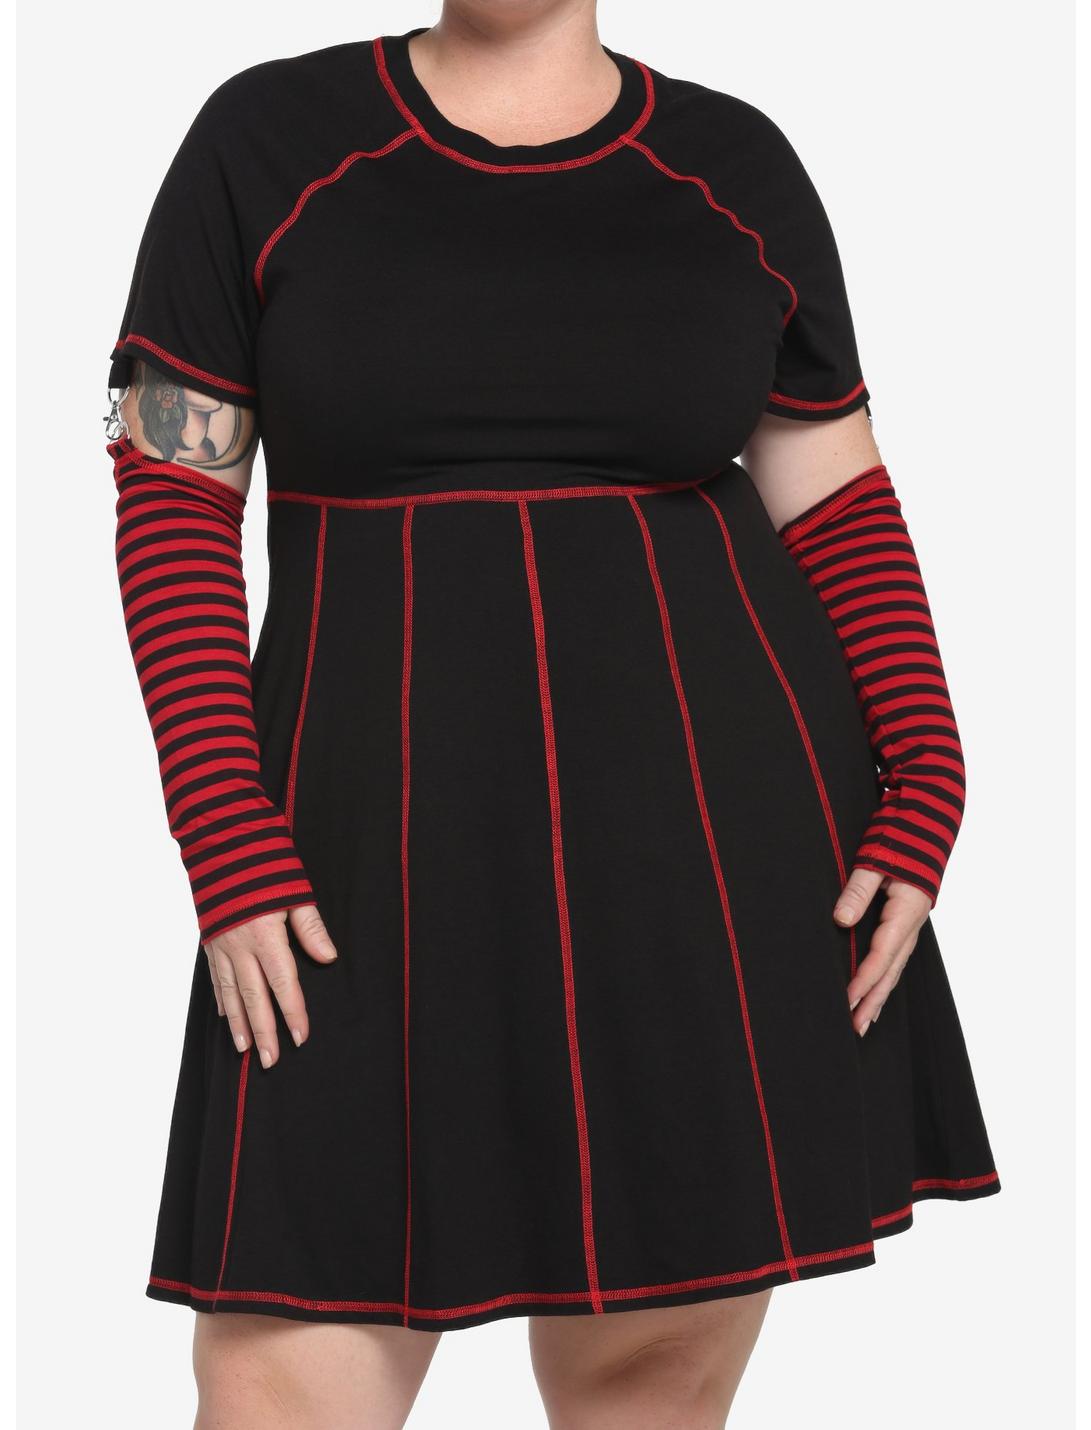 Black & Red Contrast Stitch Arm Warmer Dress Plus Size, STRIPES - RED, hi-res